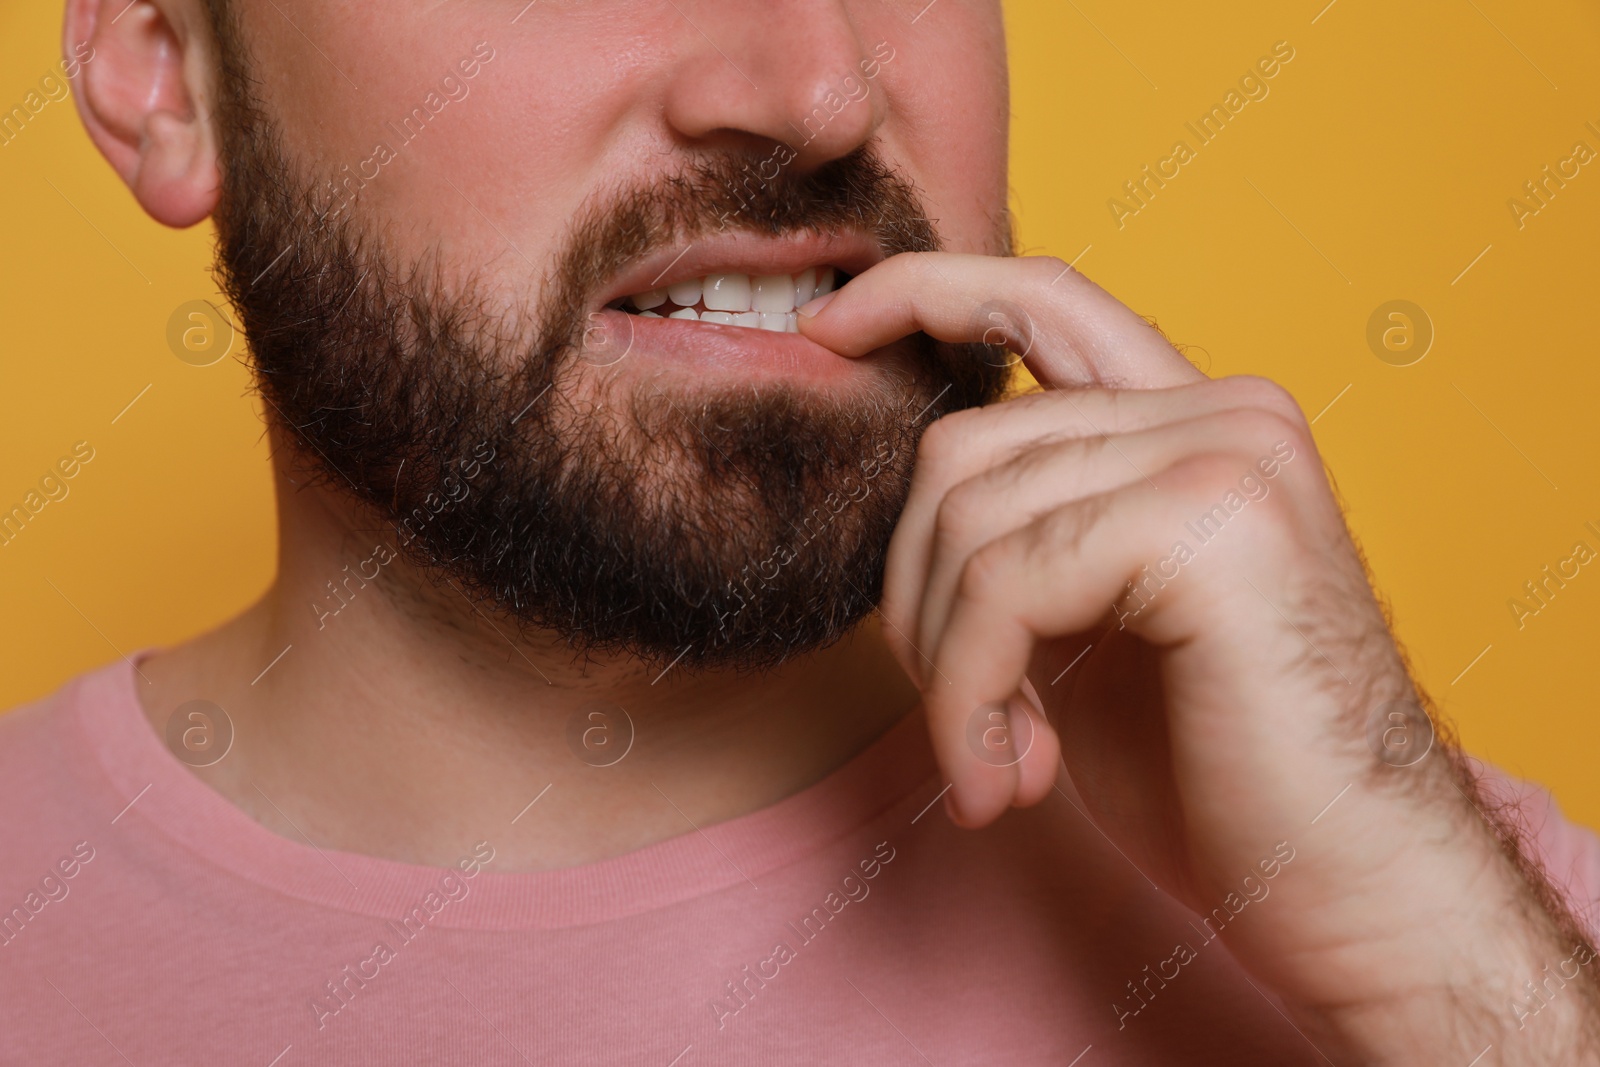 Photo of Man biting his nails on yellow background, closeup. Bad habit